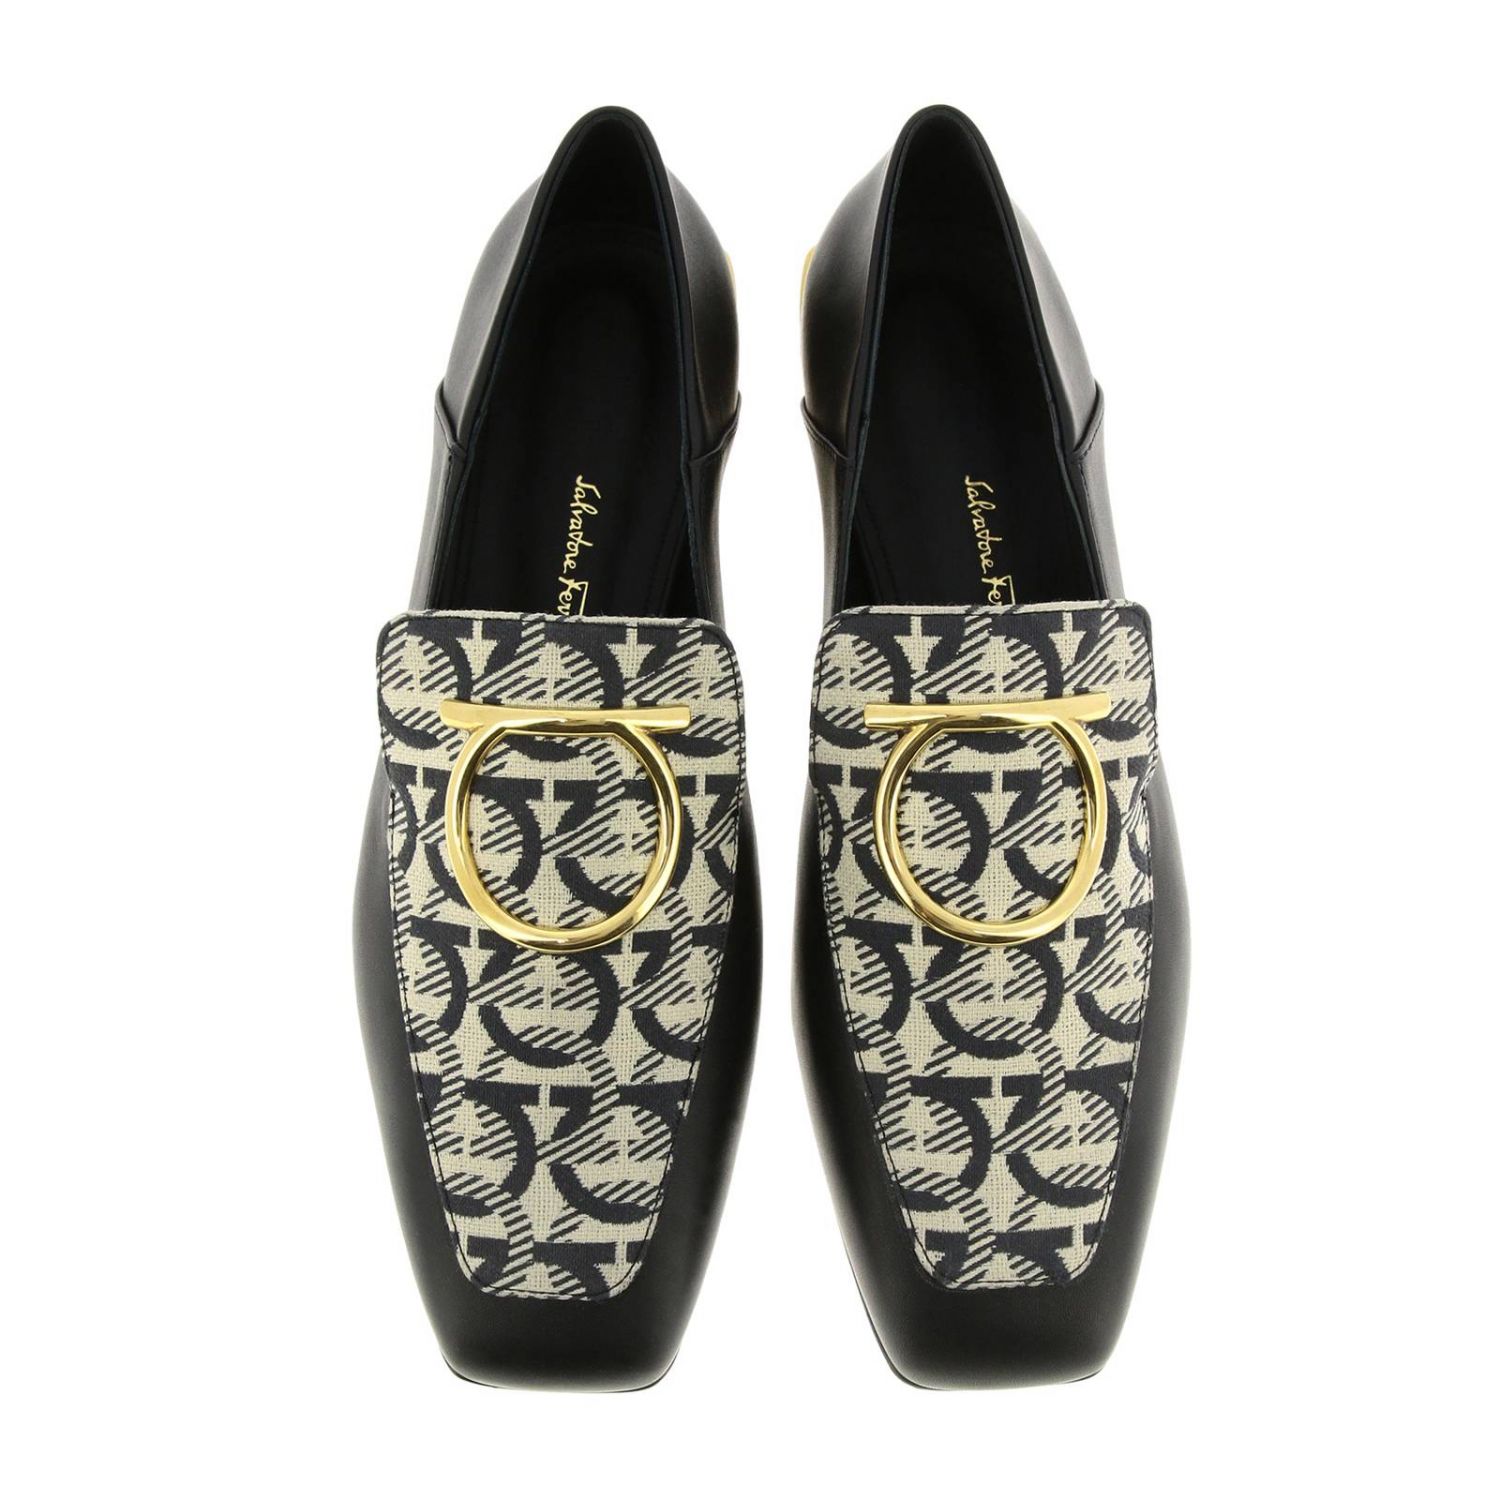 Salvatore Ferragamo Outlet: Shoes women | Loafers Salvatore Ferragamo ...